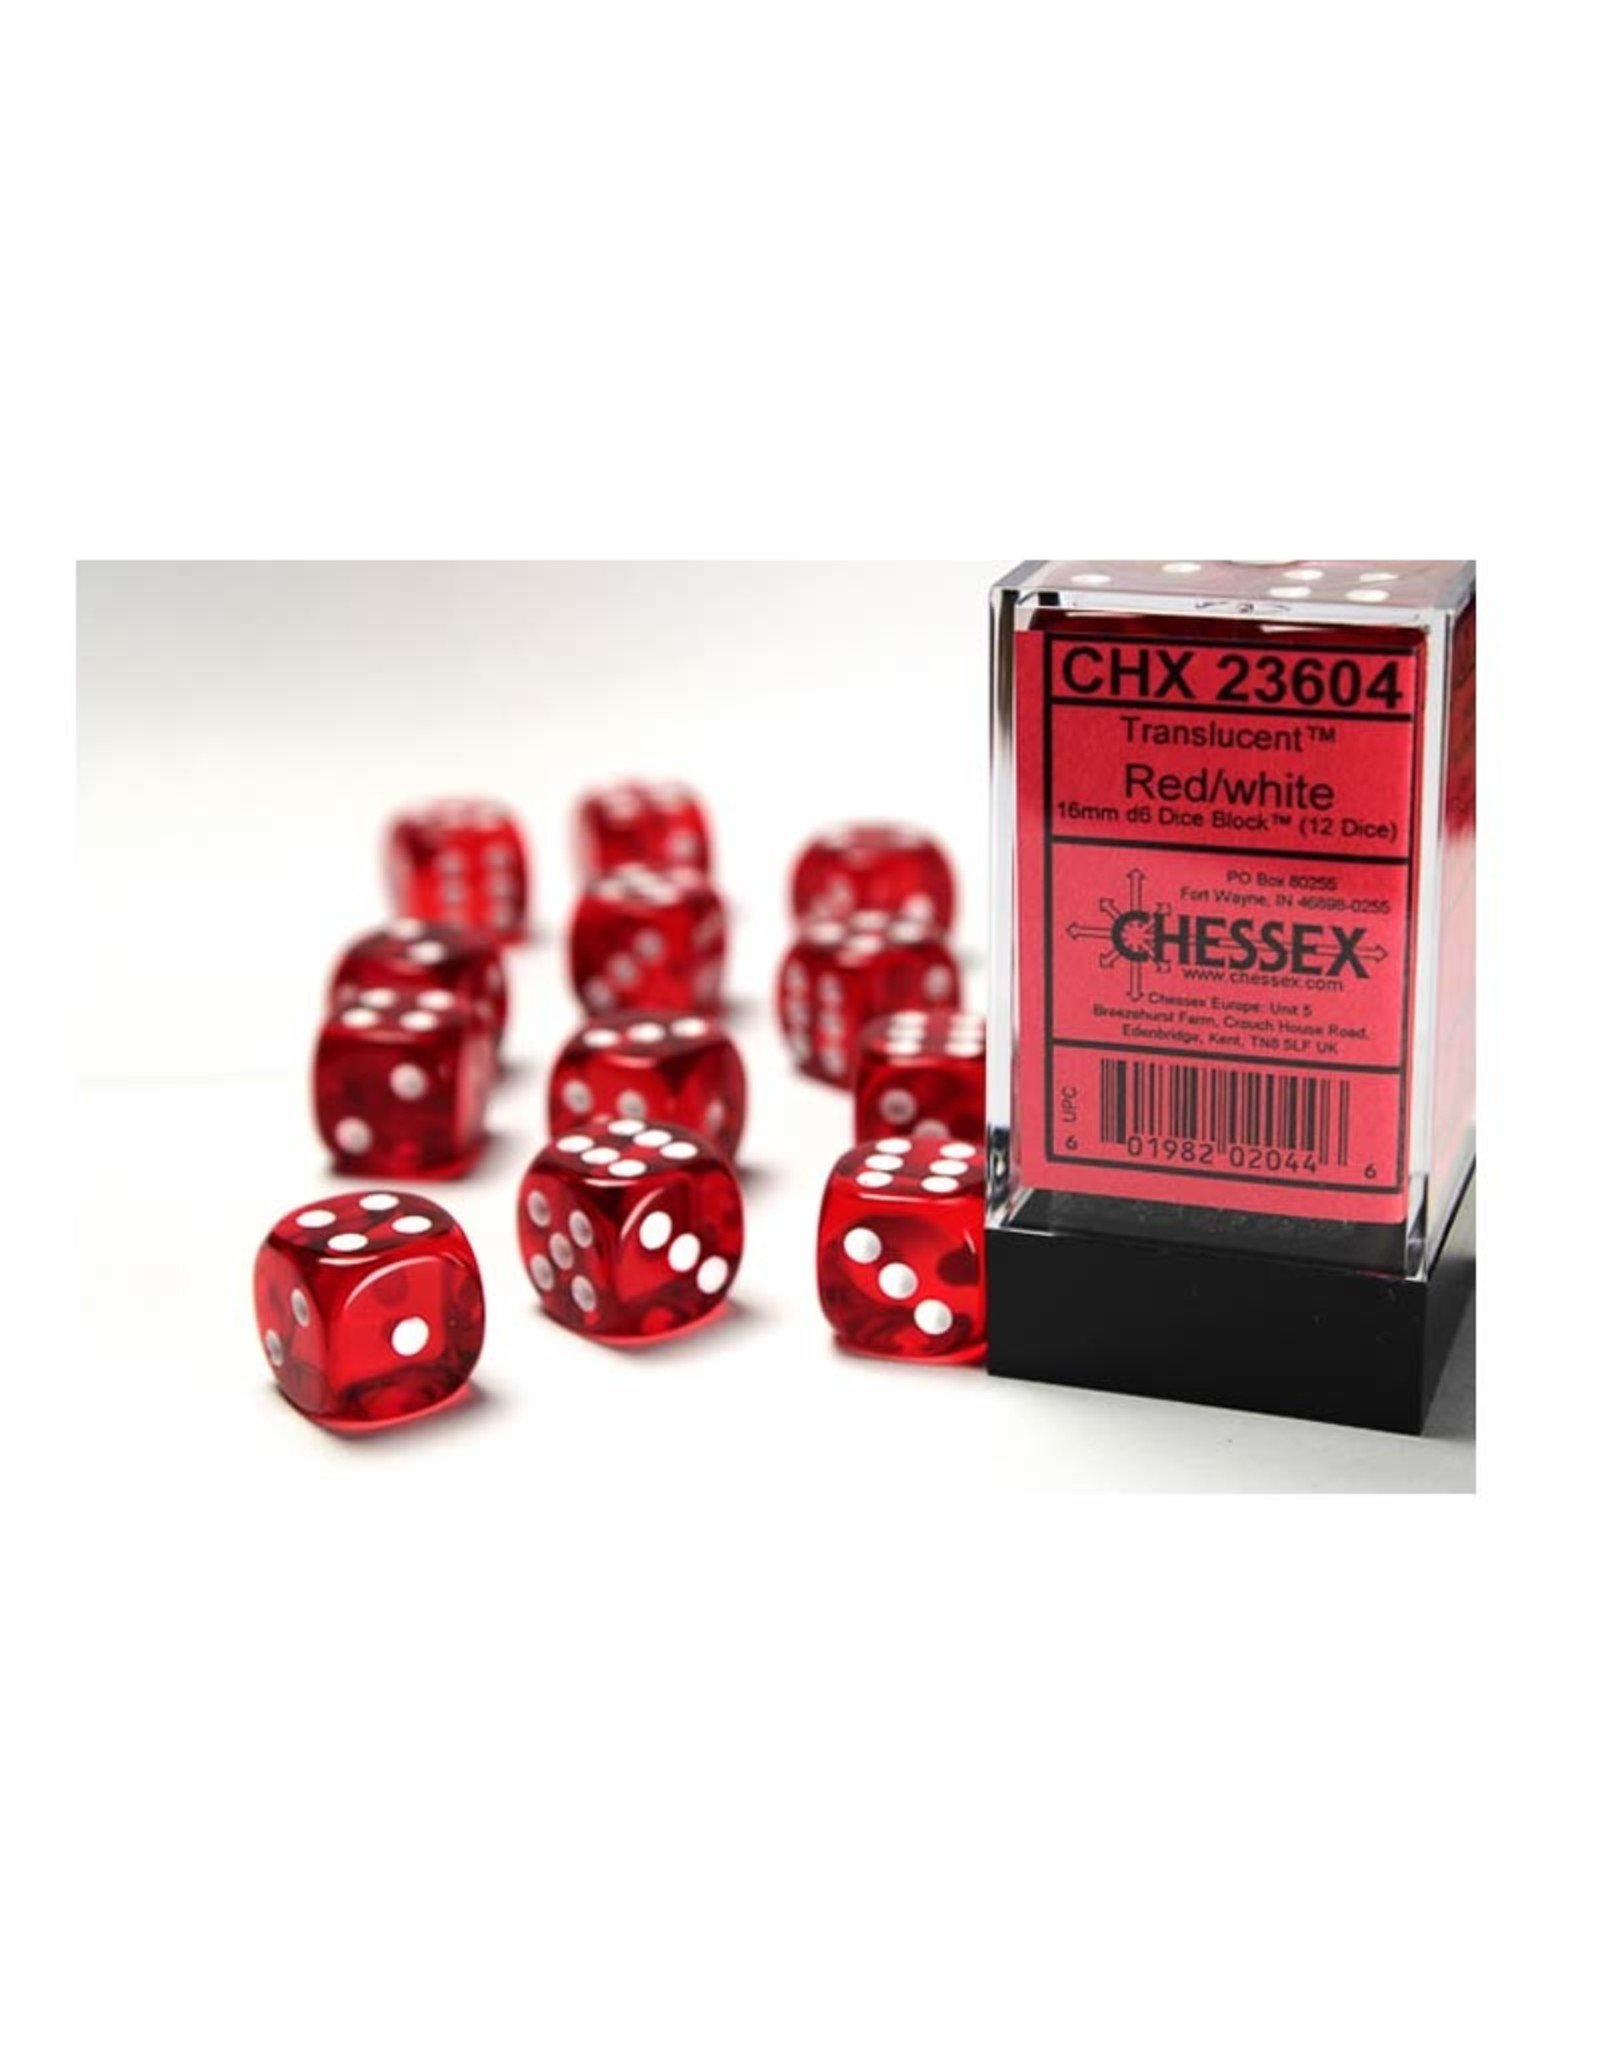 Chessex 16MM D6 Dice Set Translucent Red/White CHX 23604